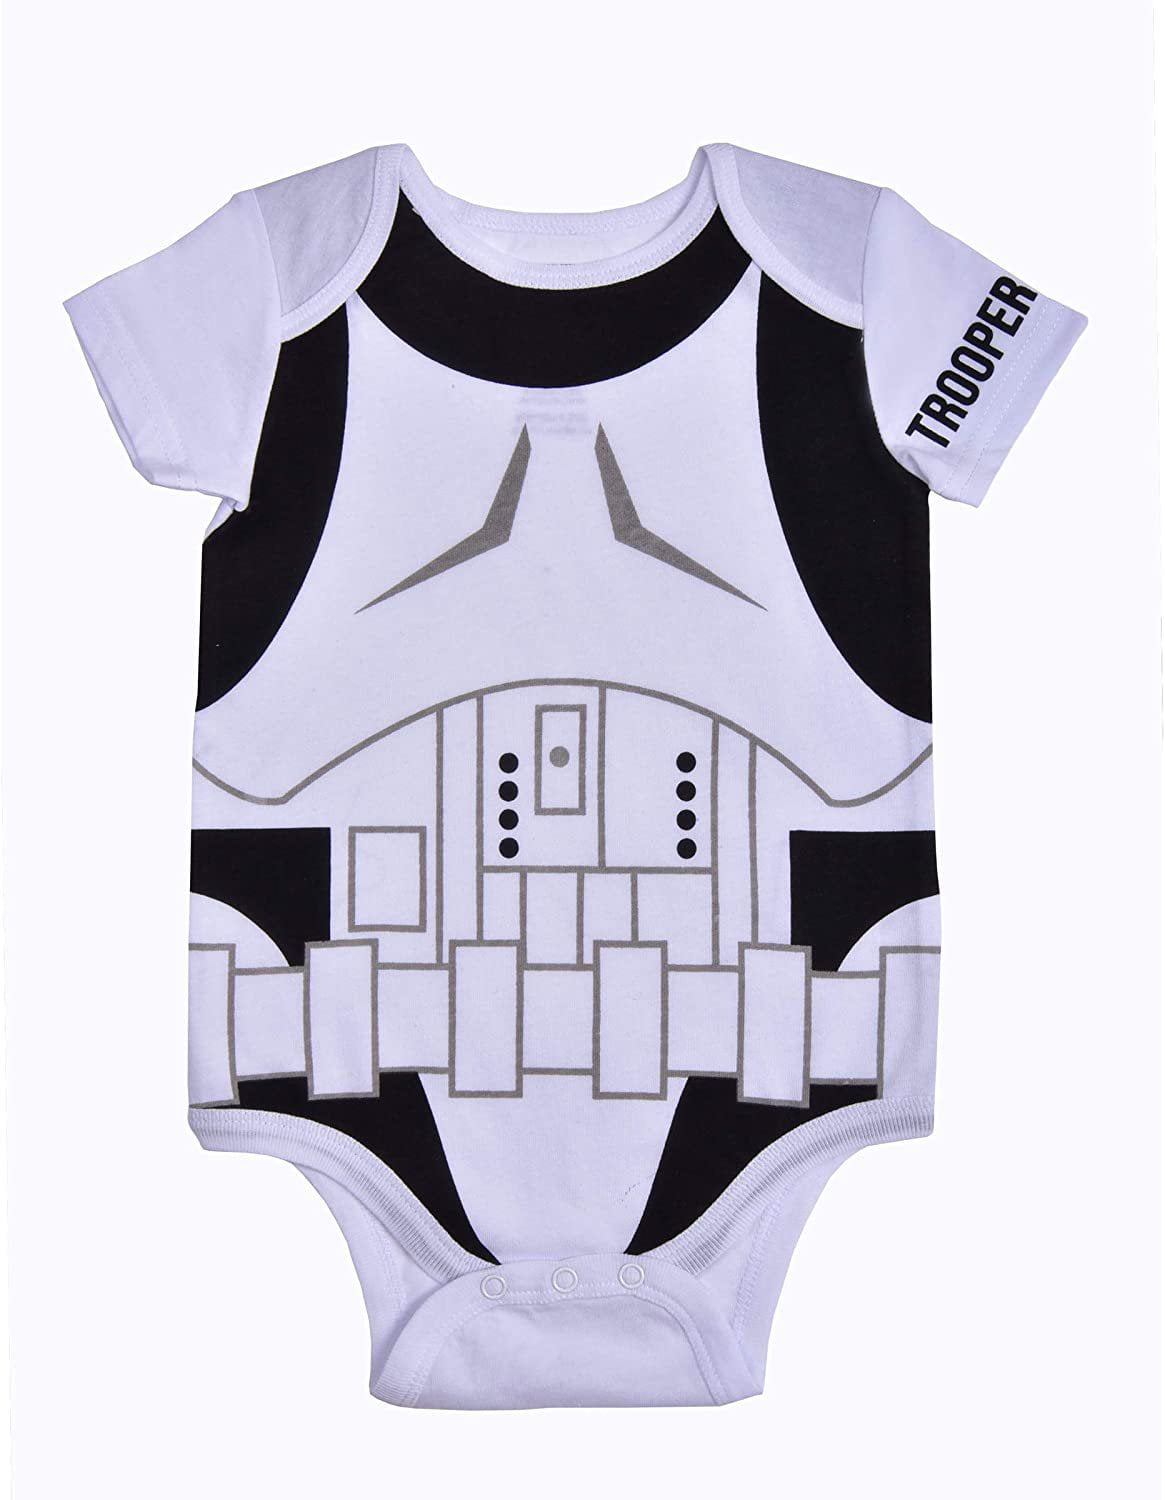 Disney Boys Star Wars Infant Short Sleeve Onesie Bodysuits Baby Costumes Multi Pack